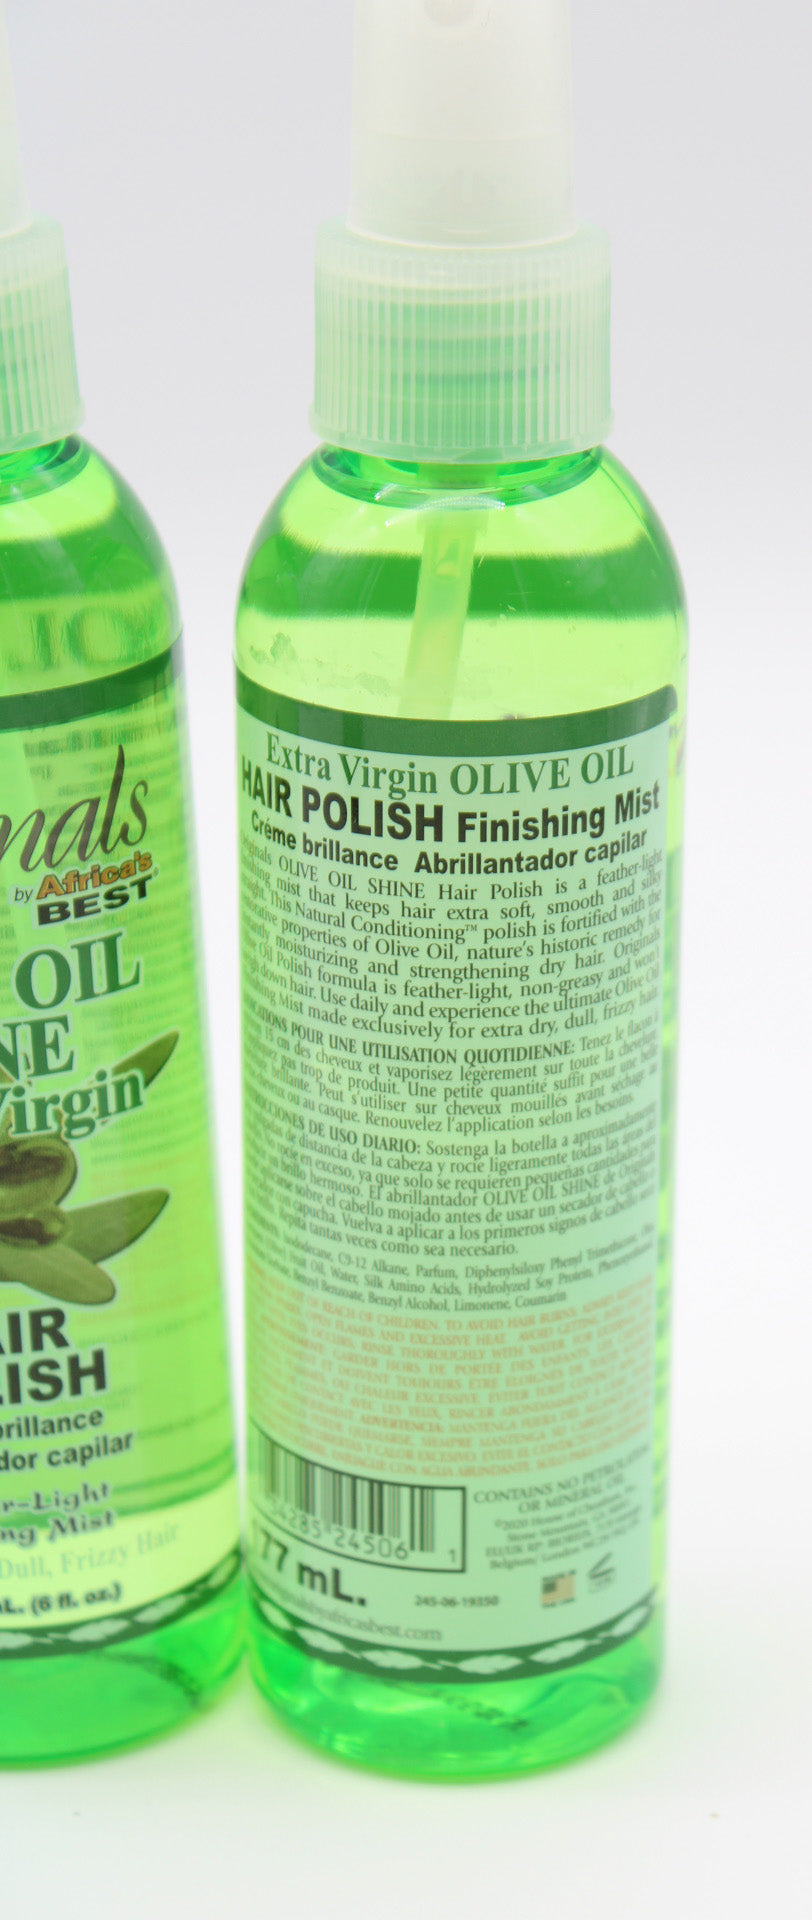 Africa's Best Originals Olive Oil Shine Extra Virgin Hair Polish Spray 6 fl oz